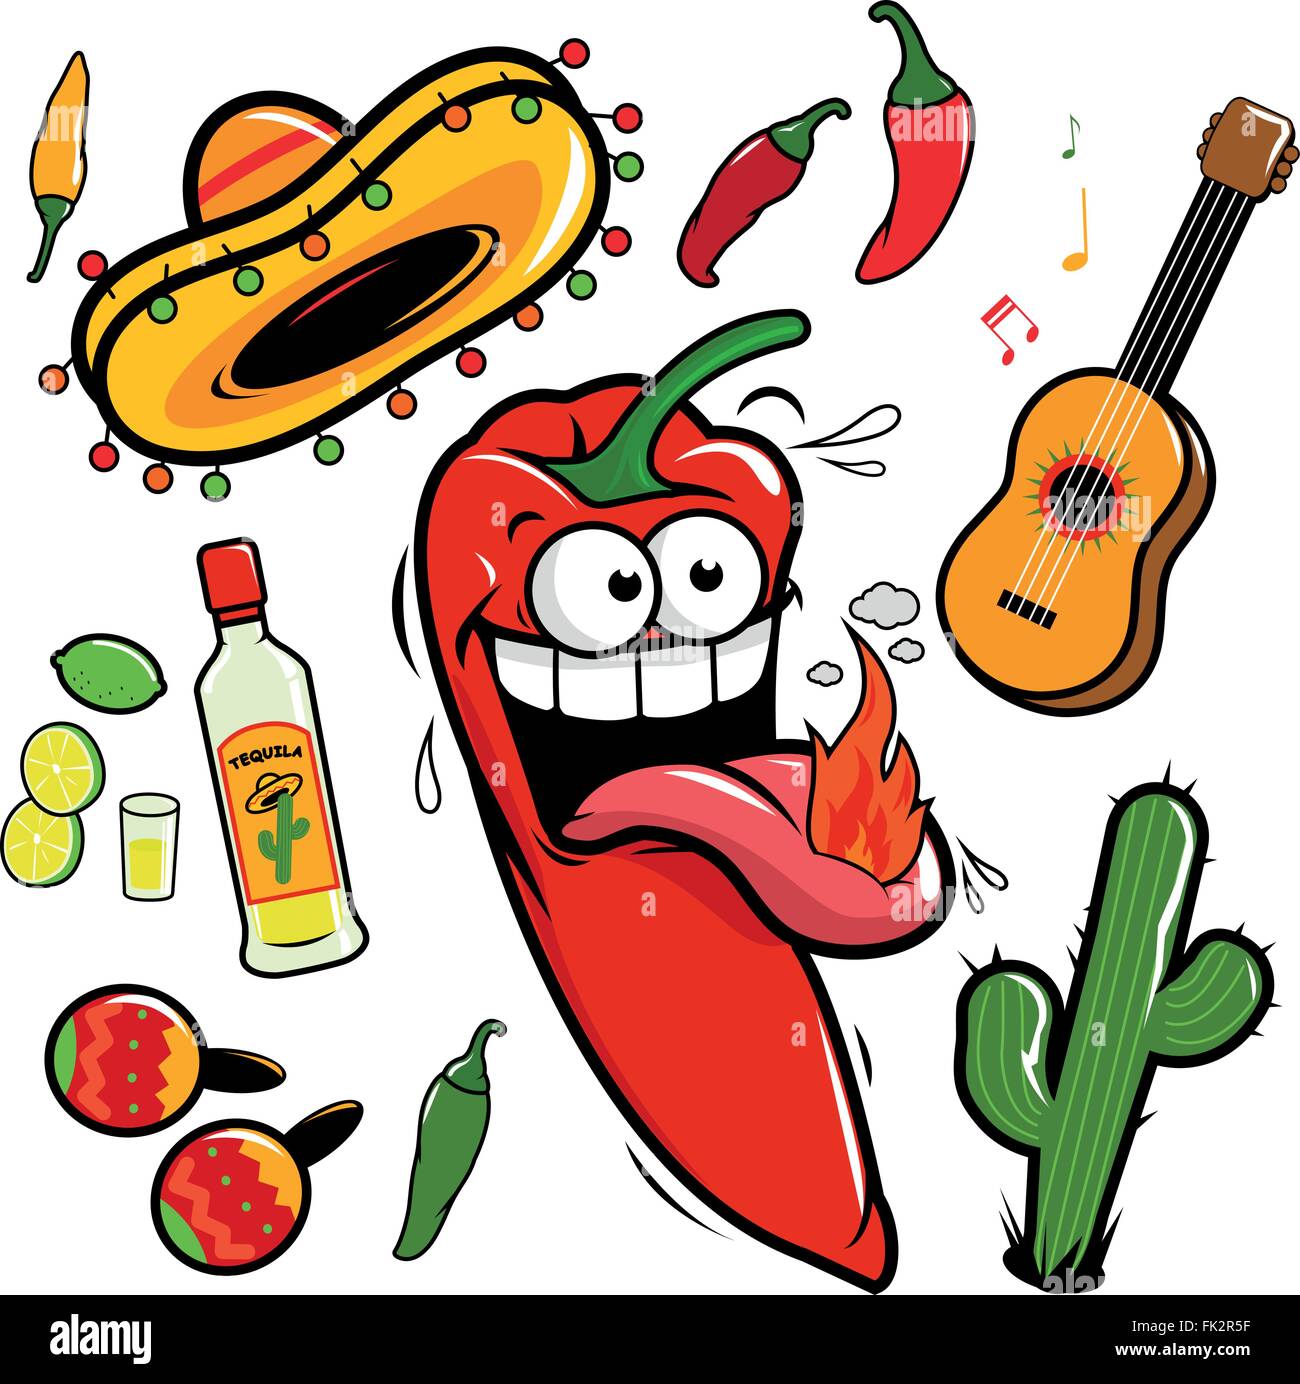 Mariachi chili pepper Mexican icon collection. Stock Vector